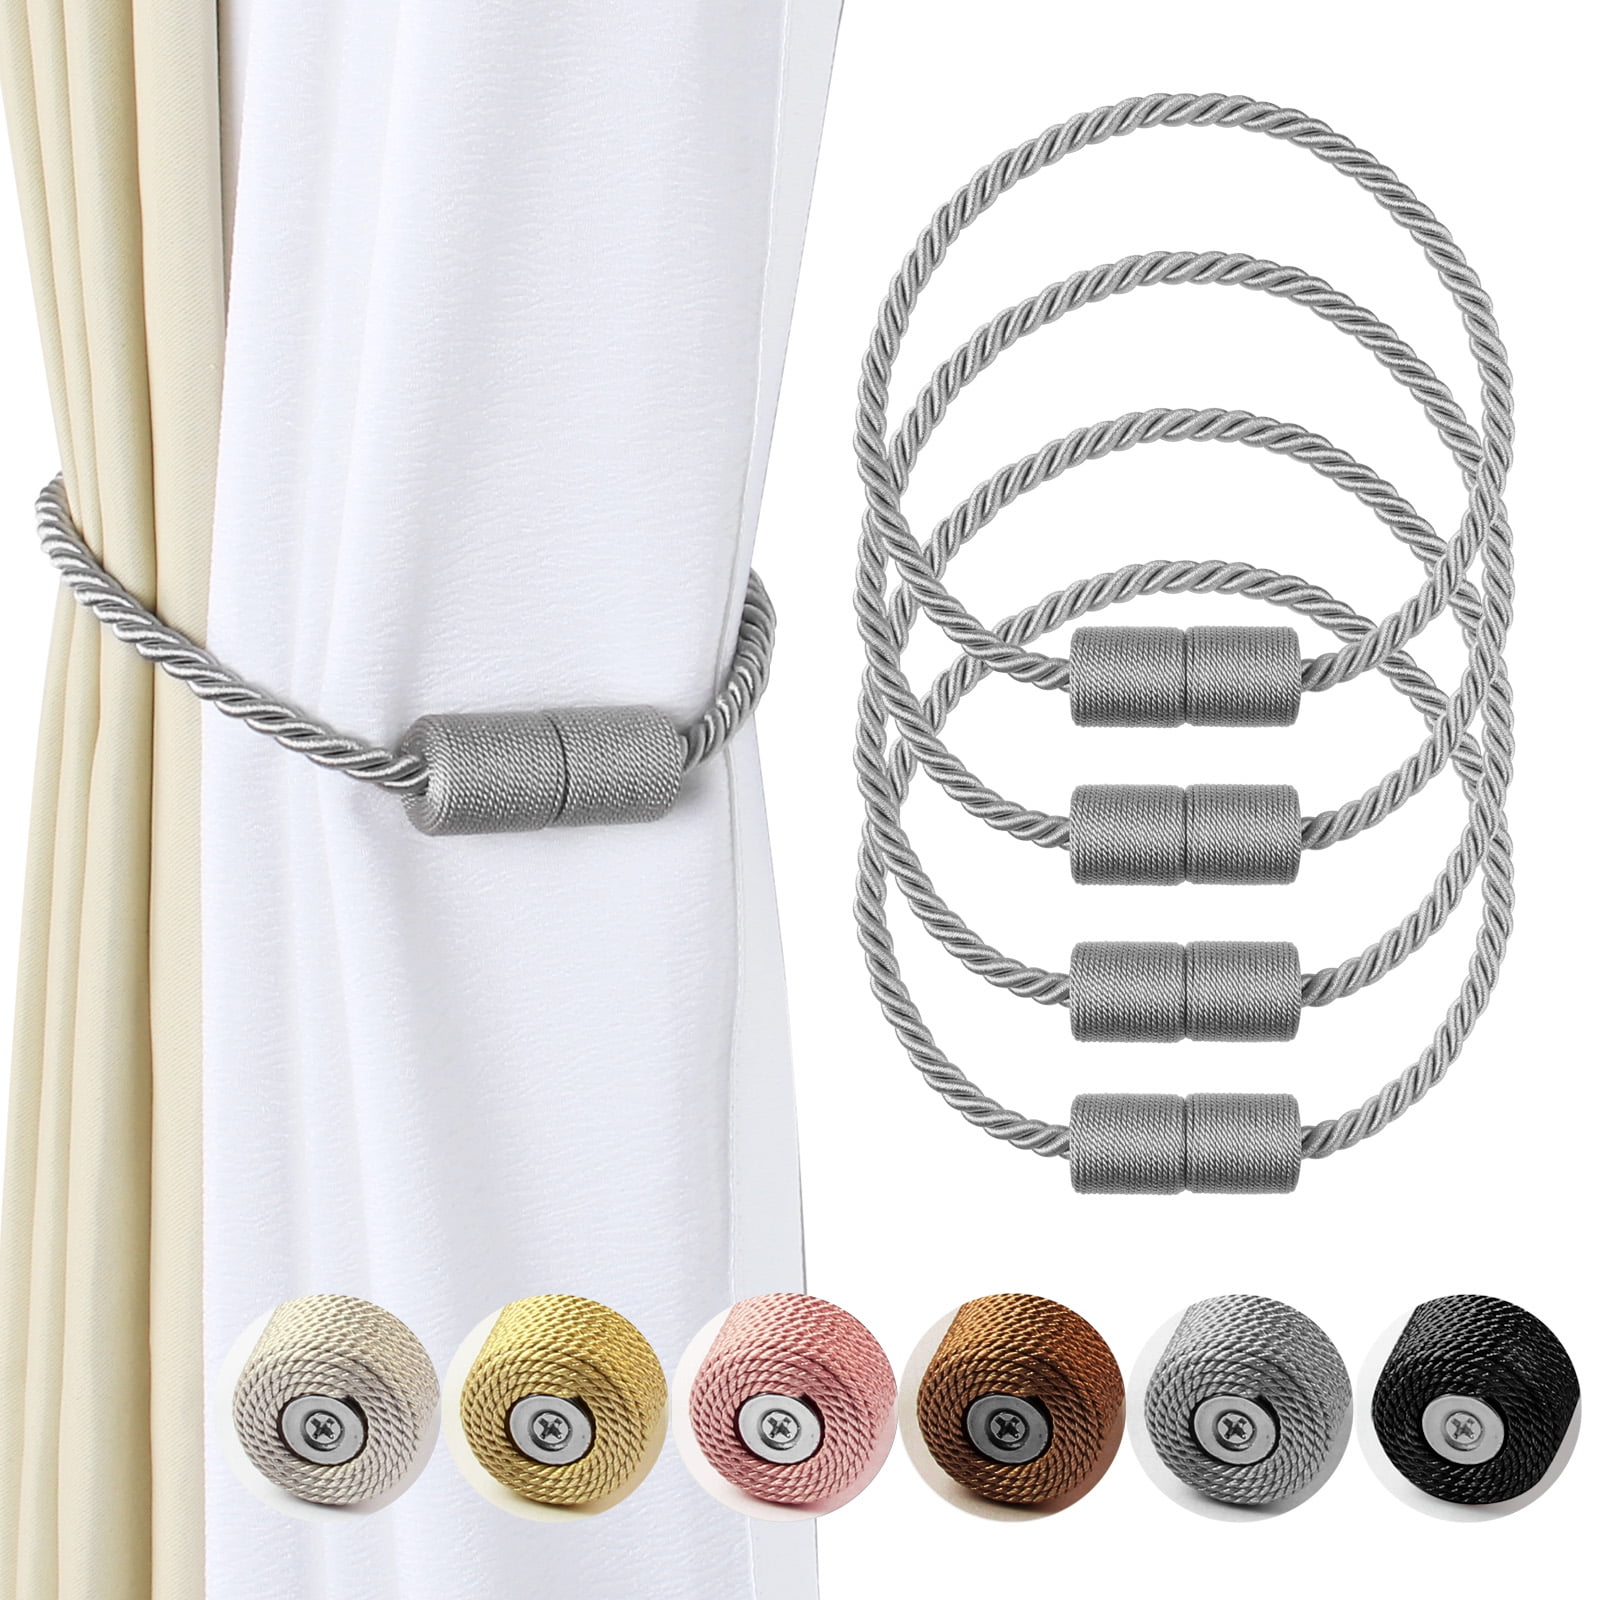 1x Curtain Tiebacks Magnetic Magnet Buckle Hanging Ball Bedroom Modern Organizer 